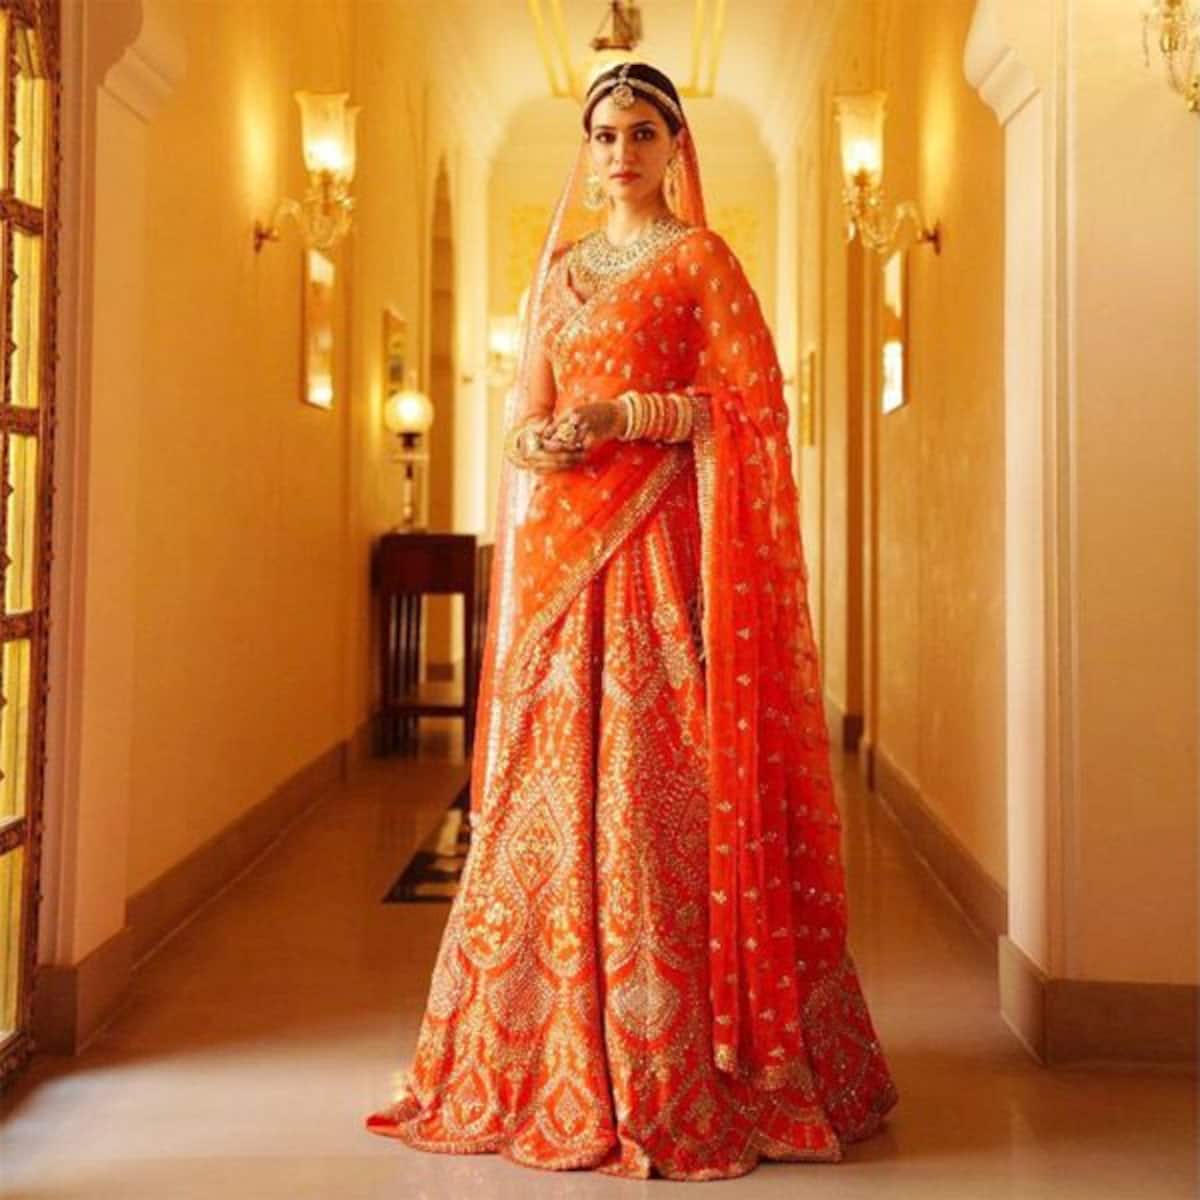 Kriti Sanon looks ravishing in this bridal saree look from Hum Do Humare Do